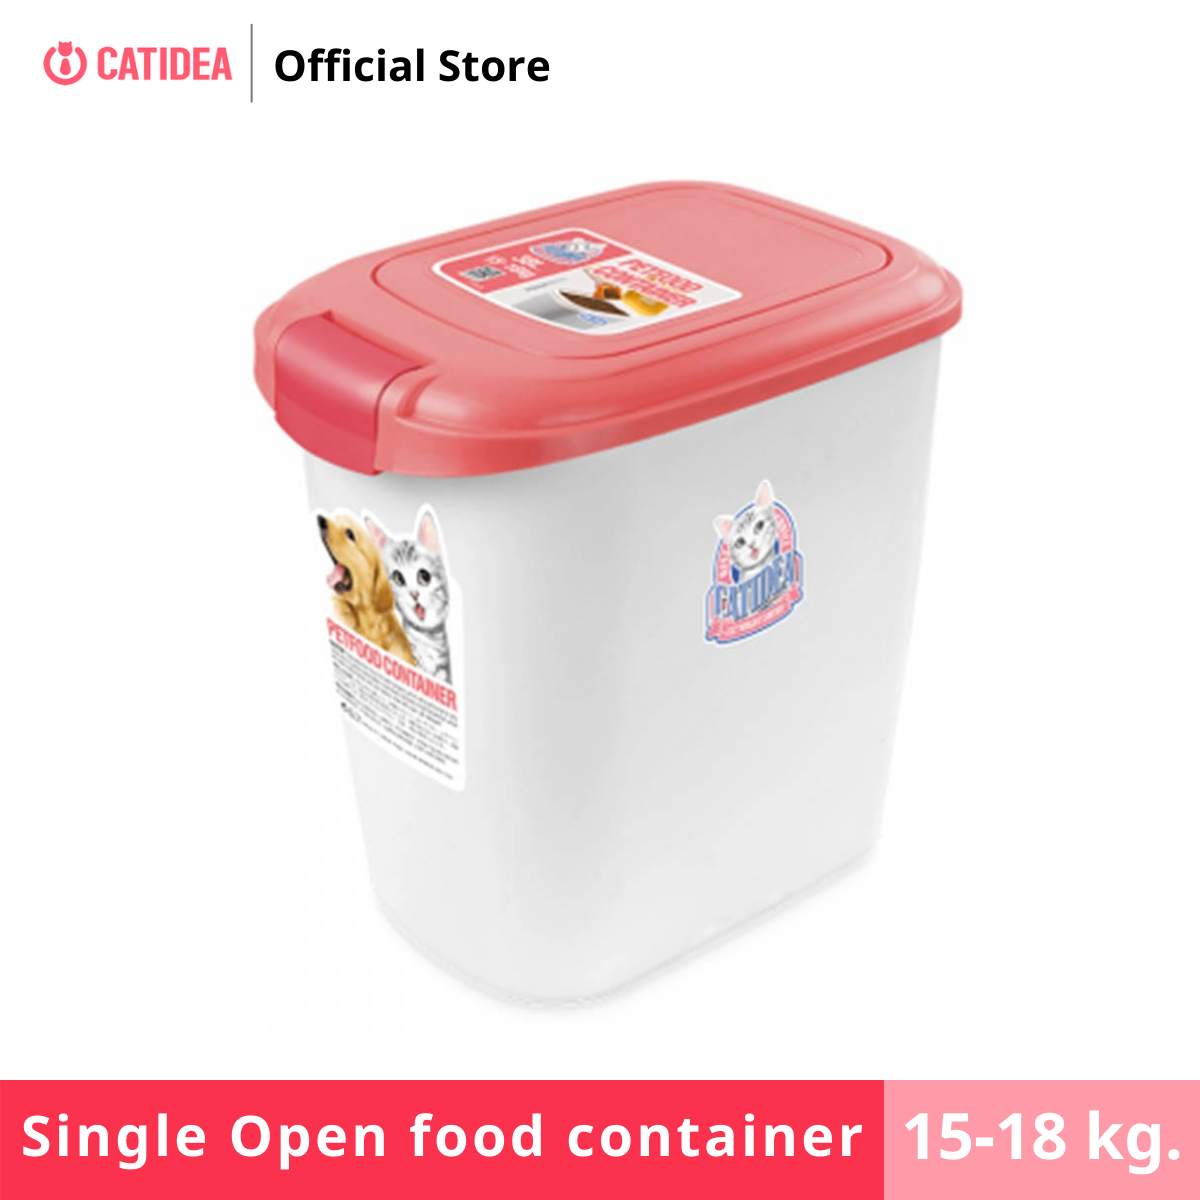 Catidea Single Open food container 15-18 kg. ถังเก็บอาหารสัตว์เลี้ยง พร้อมช้อนตัก ขนาด 15-18 กิโลกรัม